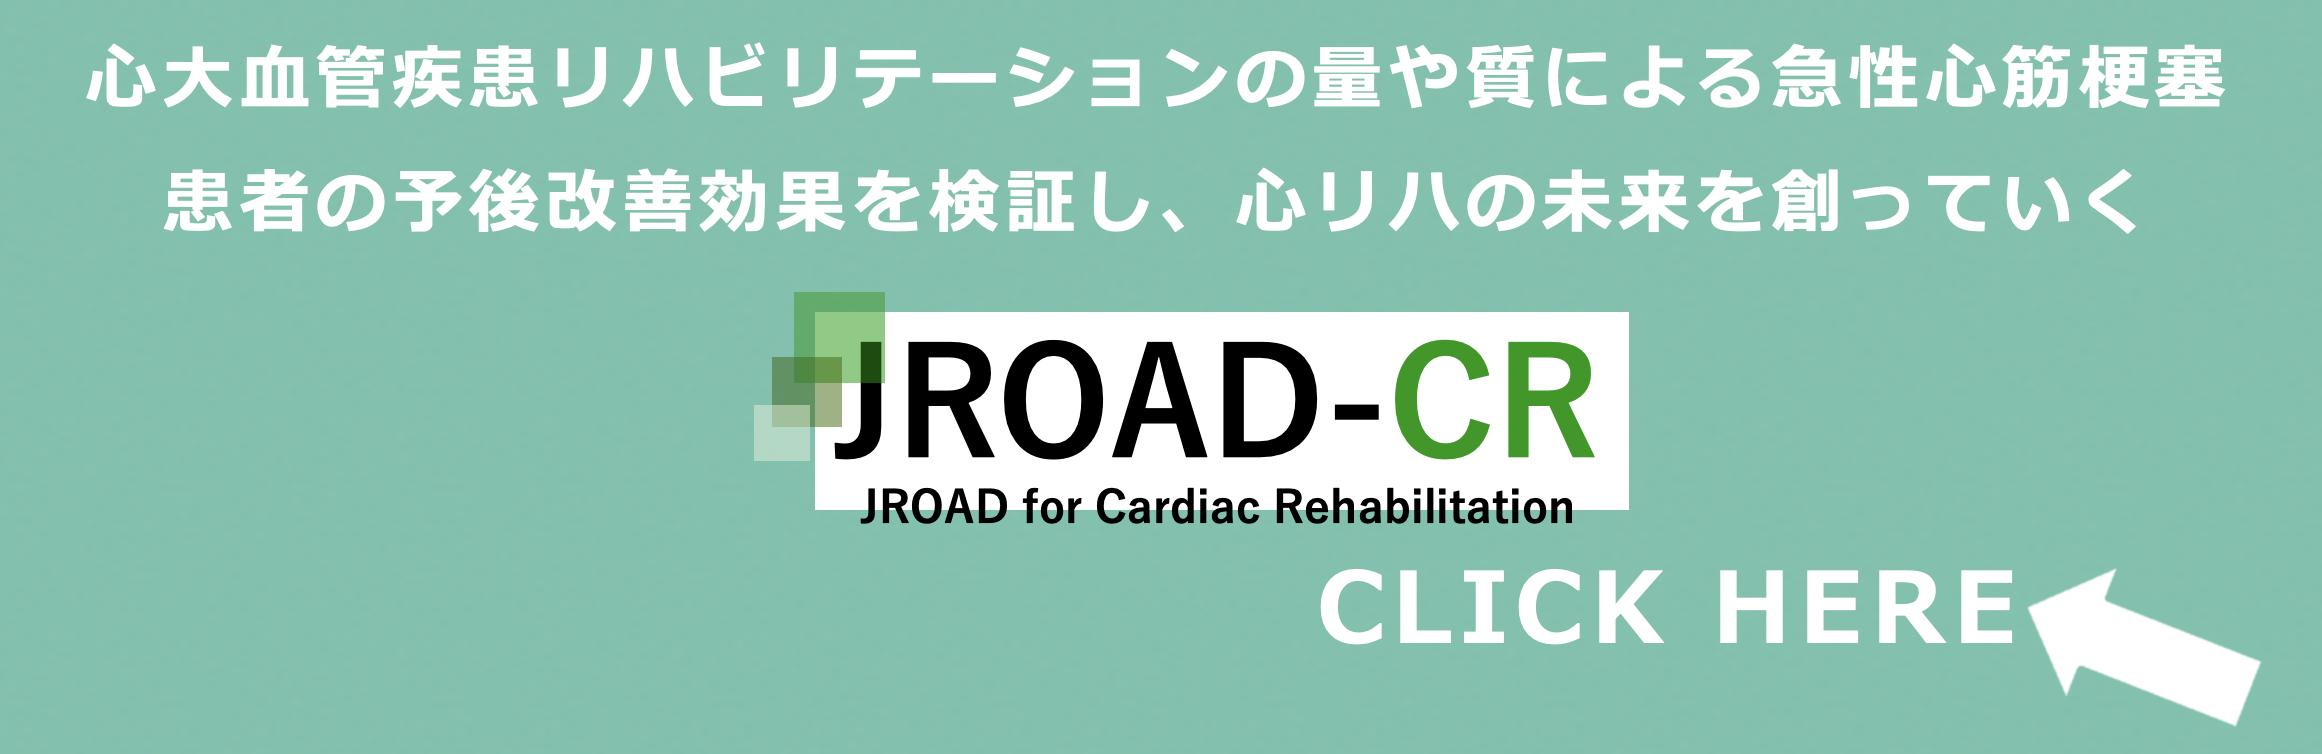 JROAD-CR